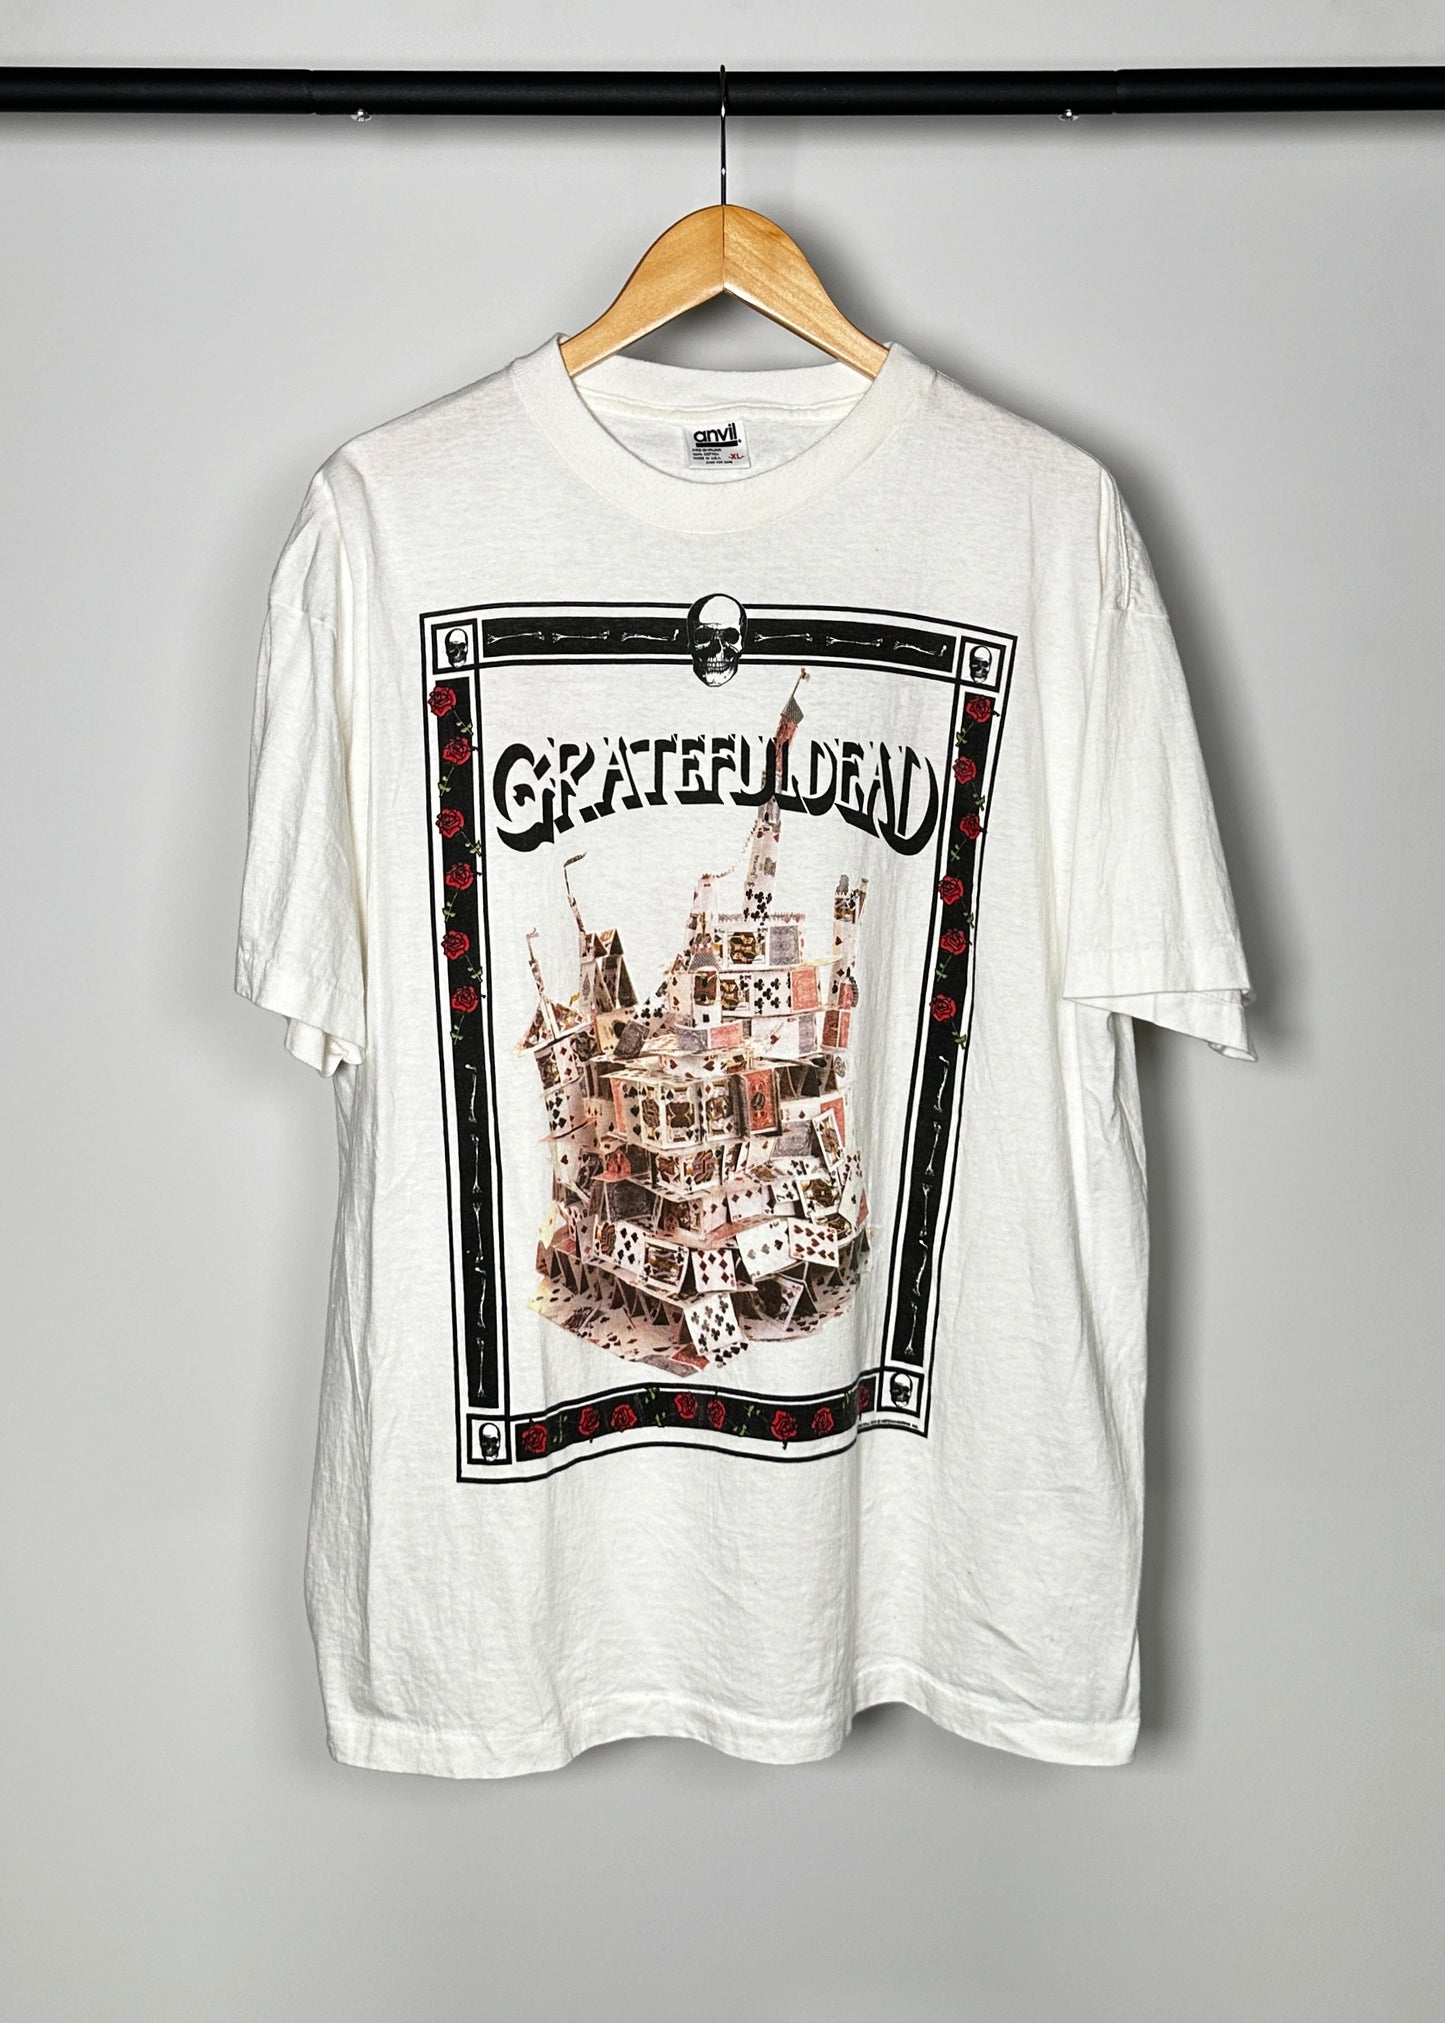 1989 Grateful Dead House of Cards T-Shirt